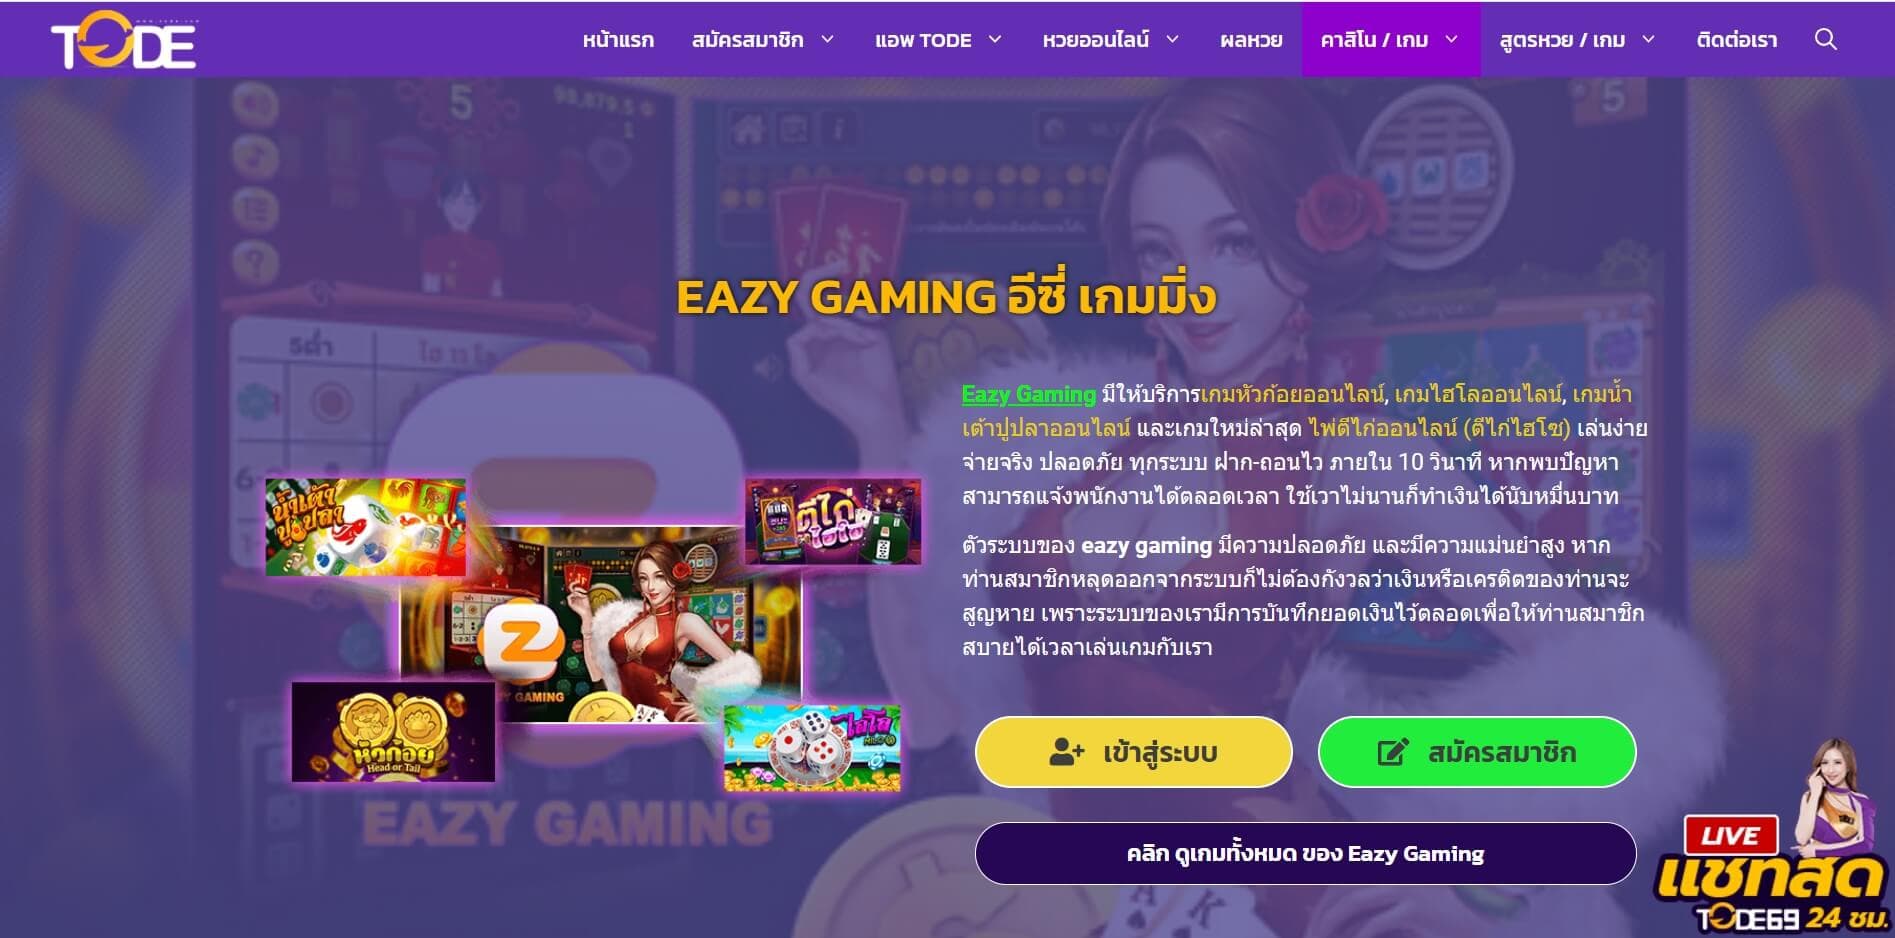 Eazy Gaming เว็บโต๊ด